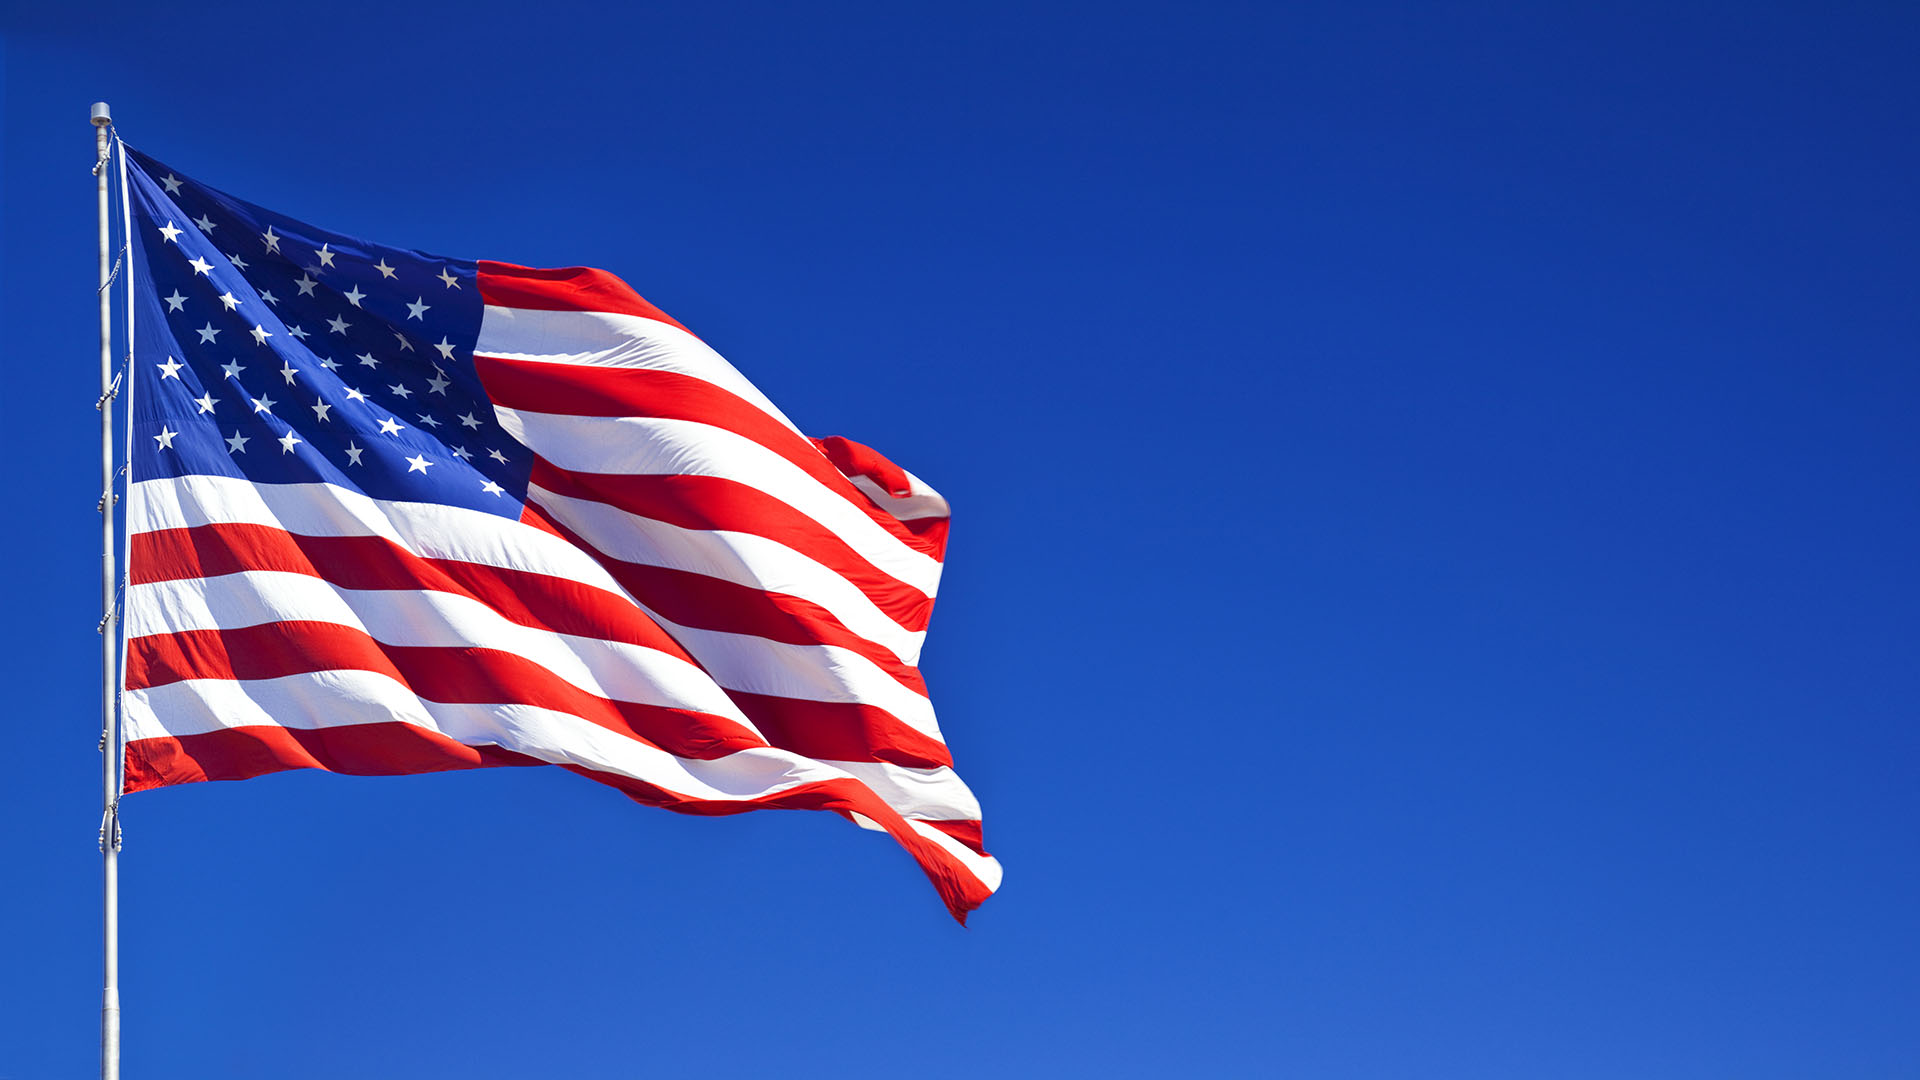 The US flag